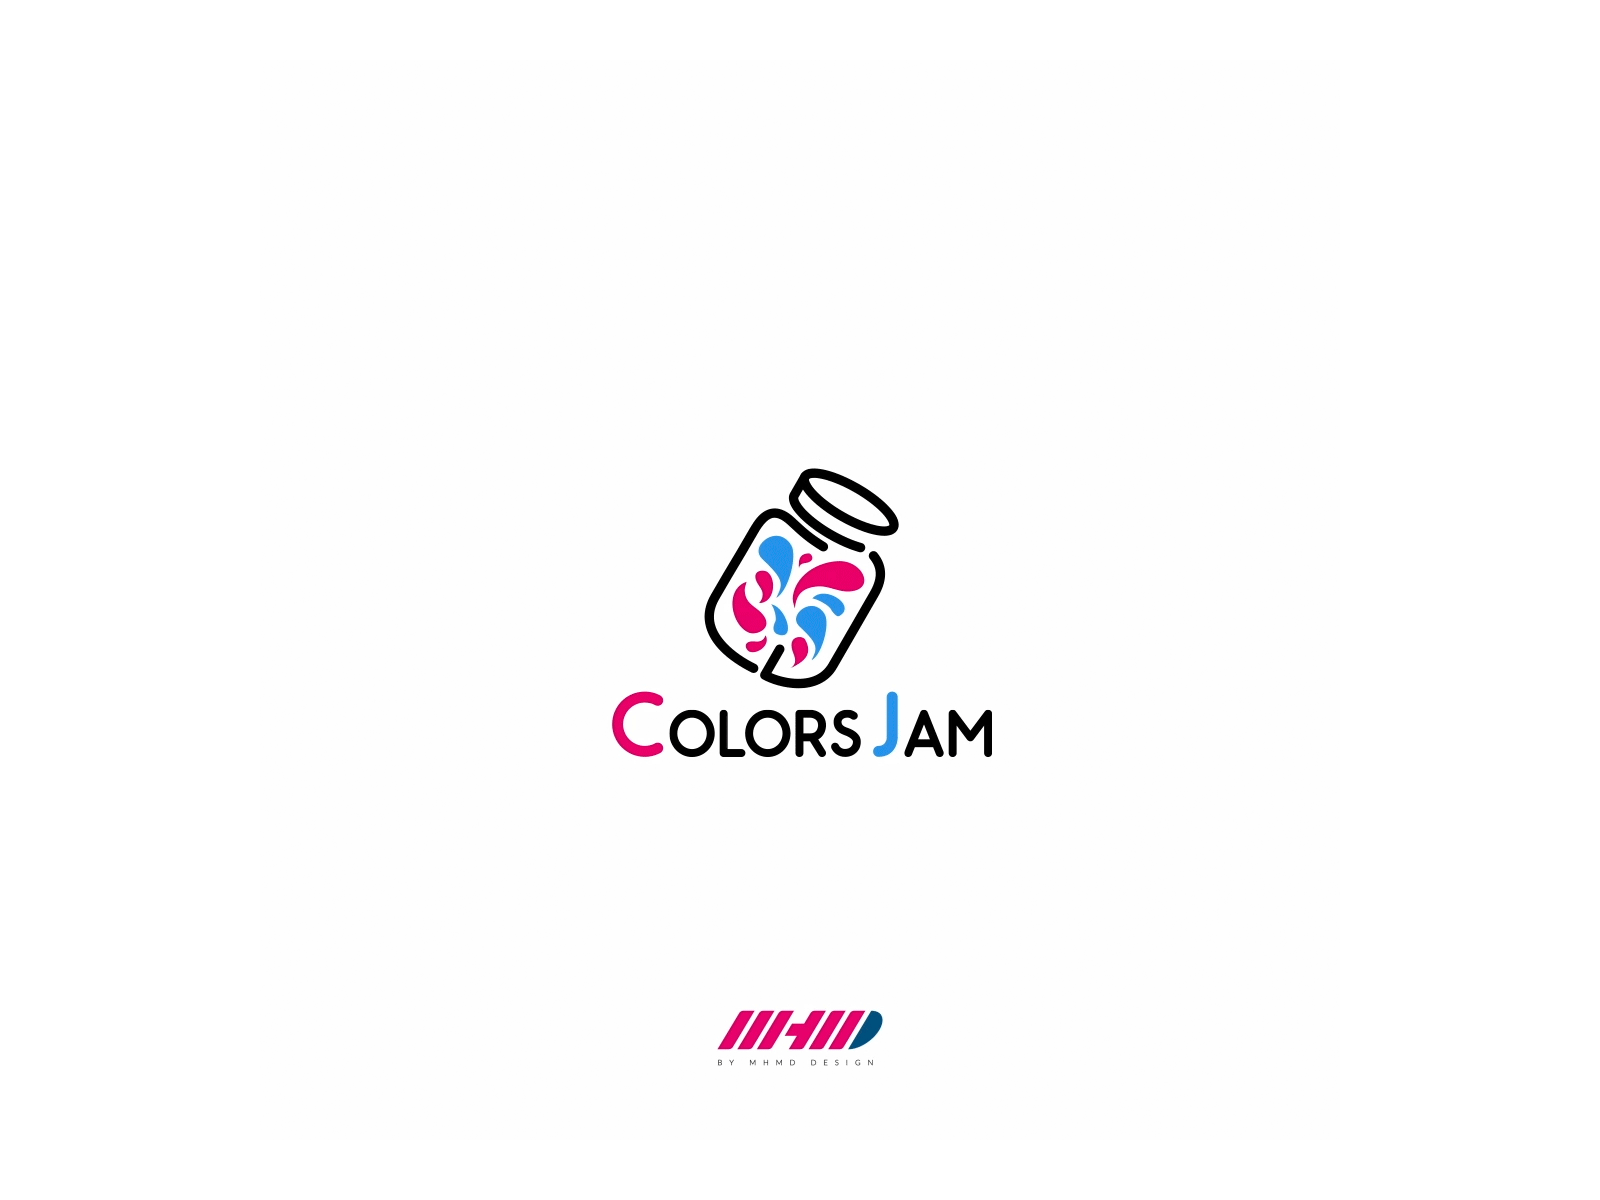 Colors Jam logo animation